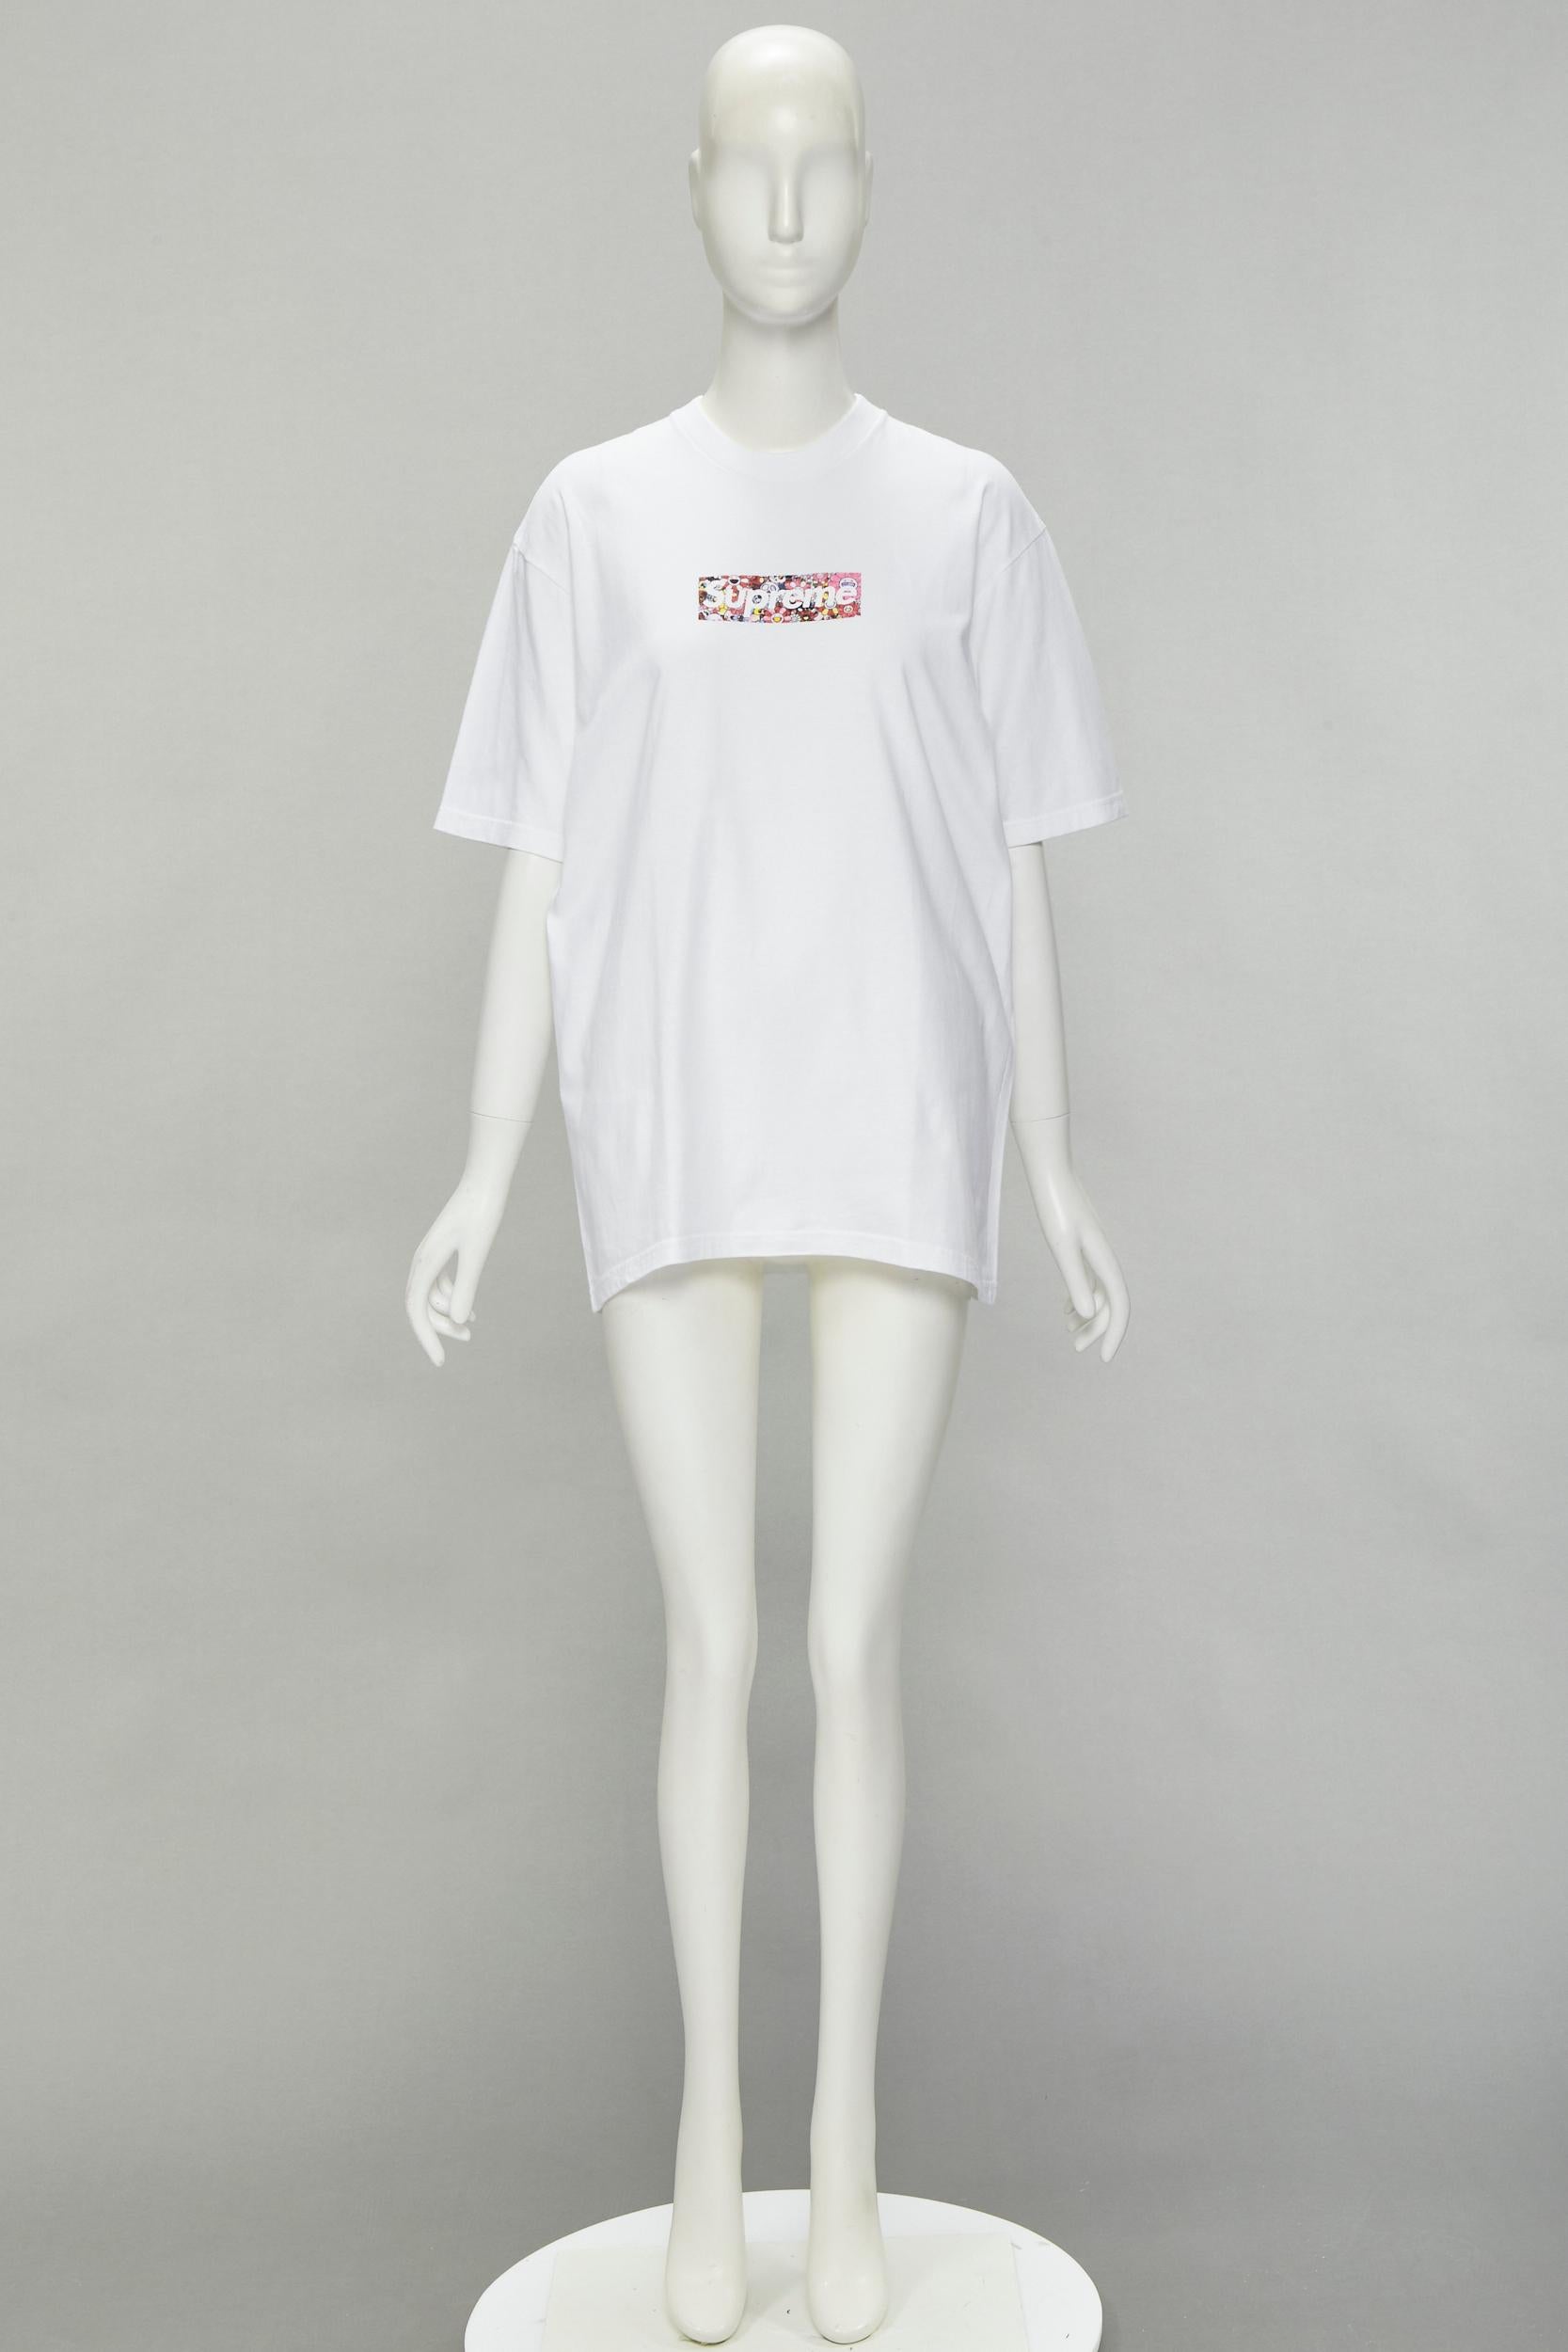 SUPREME Murakami Relief Fund floral box logo white cotton tshirt M For Sale 1